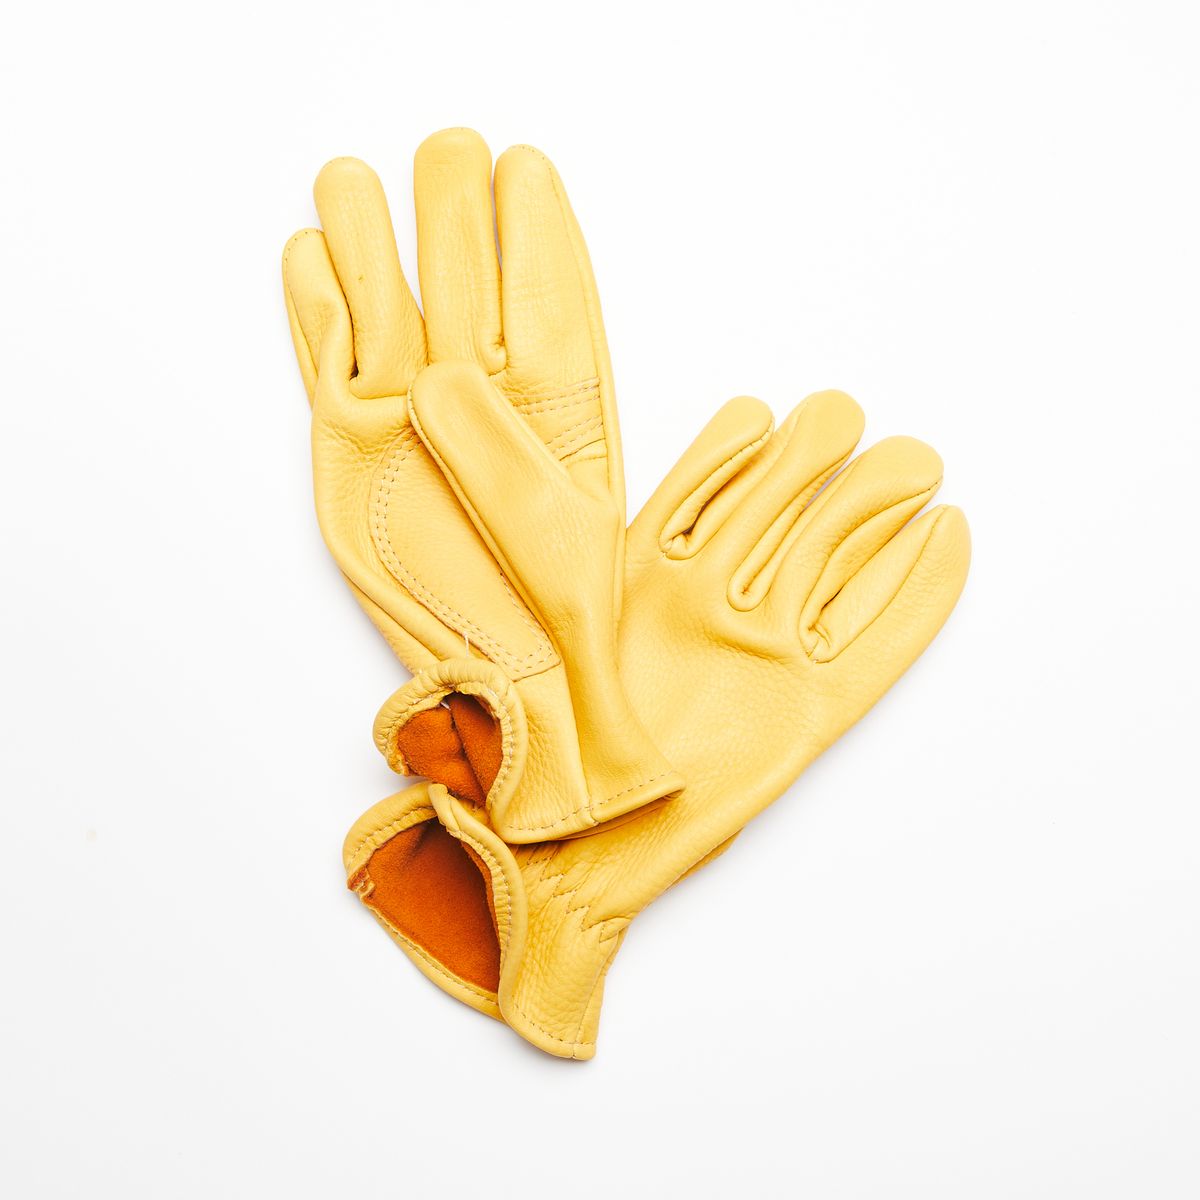 2 Buttery yellow deerskin garden gloves with brown orange interior laying flat